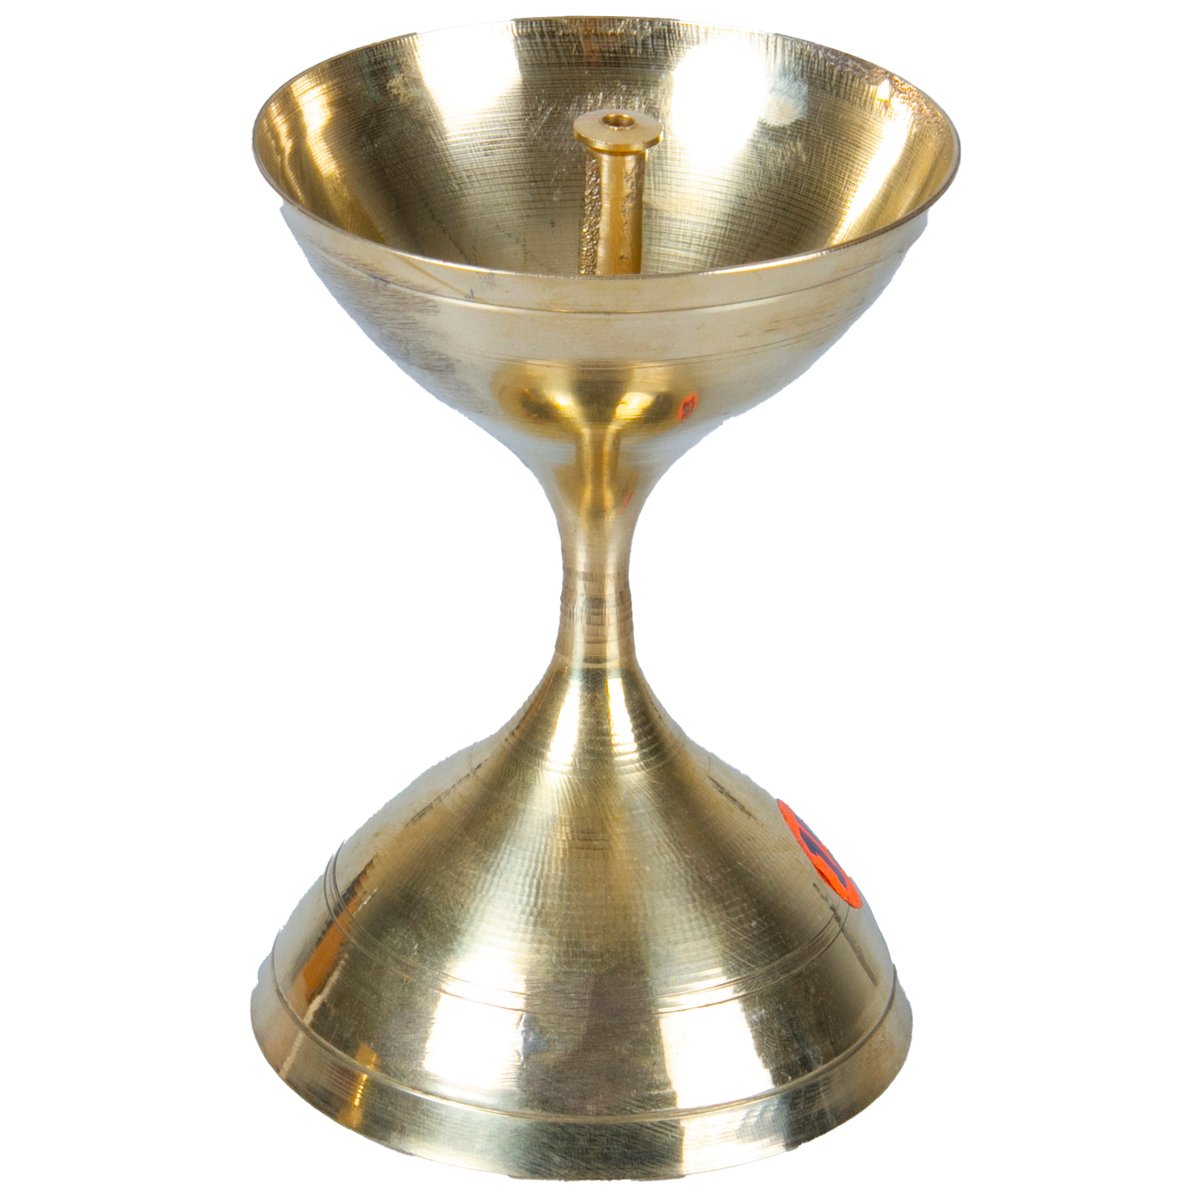 Madhoor Brass Diya Stand 7x6cm Assorted